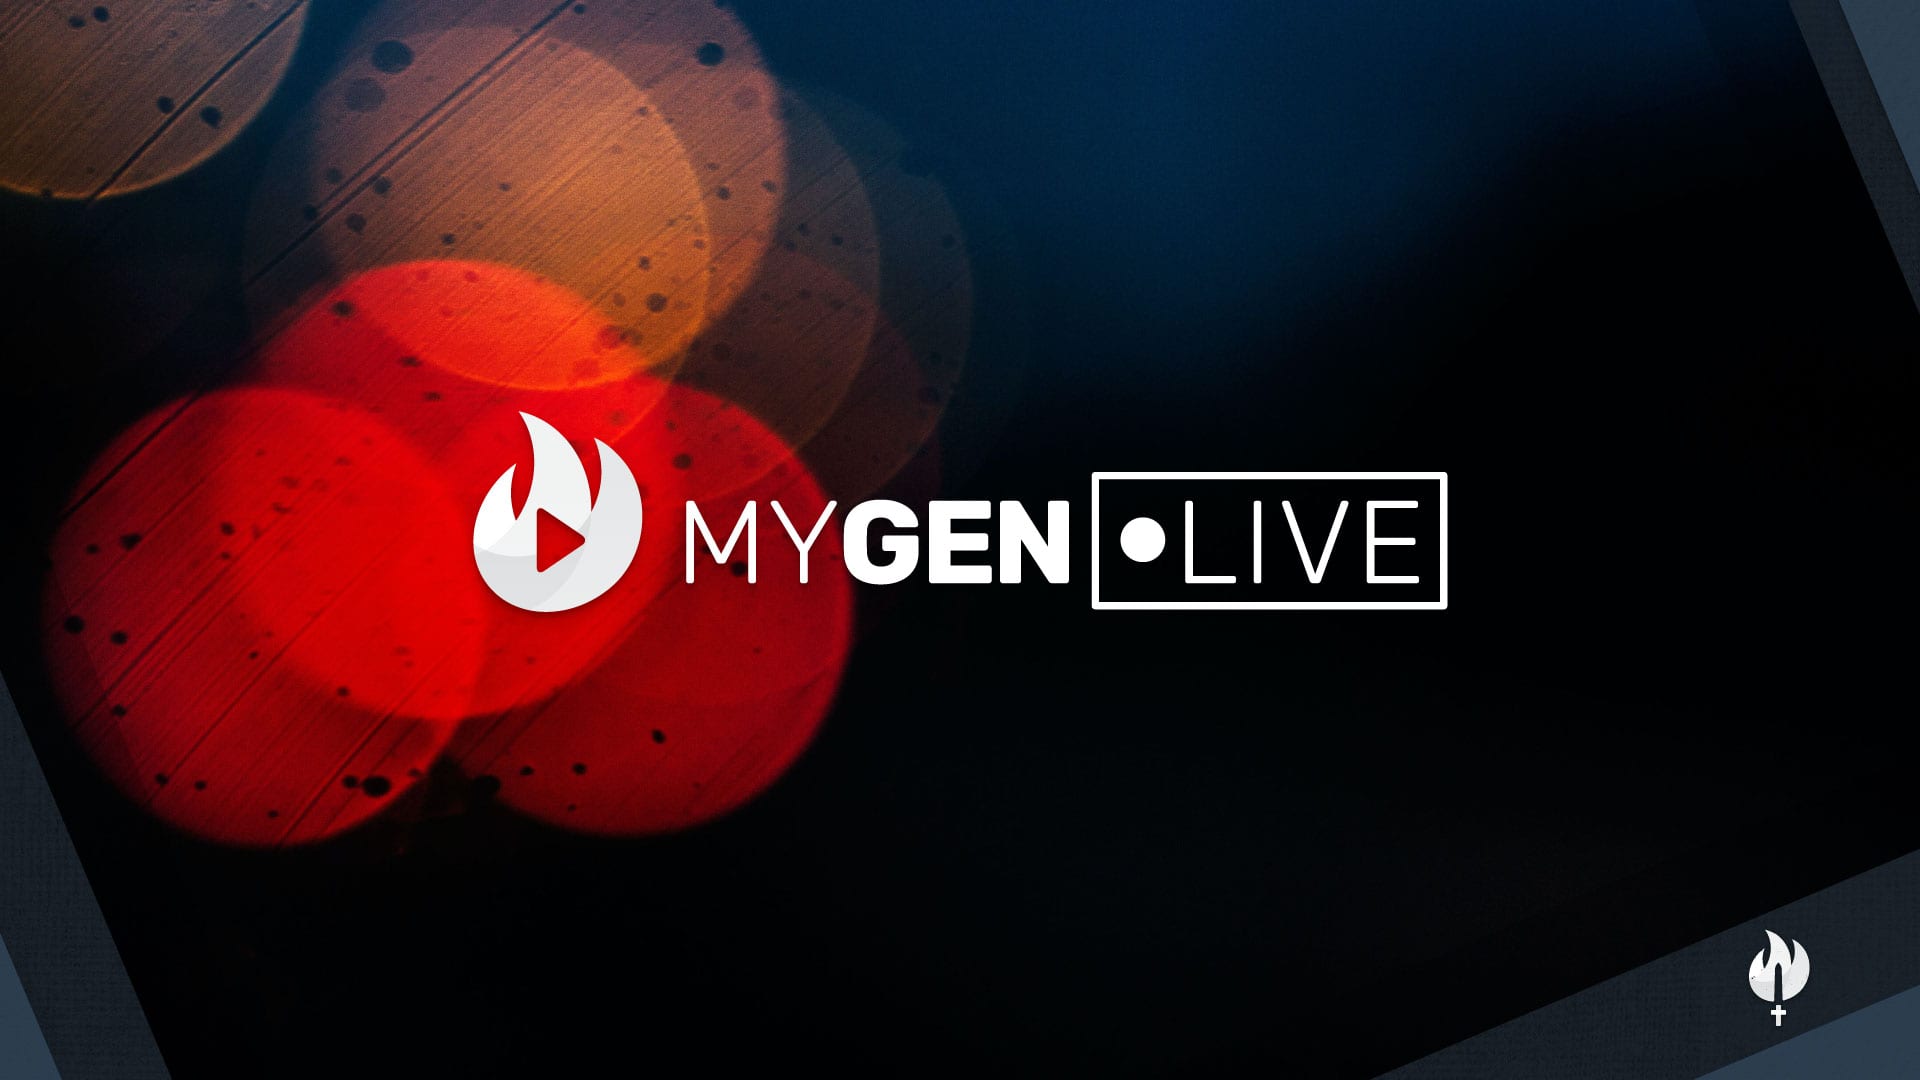 “MyGen LIVE” is Born